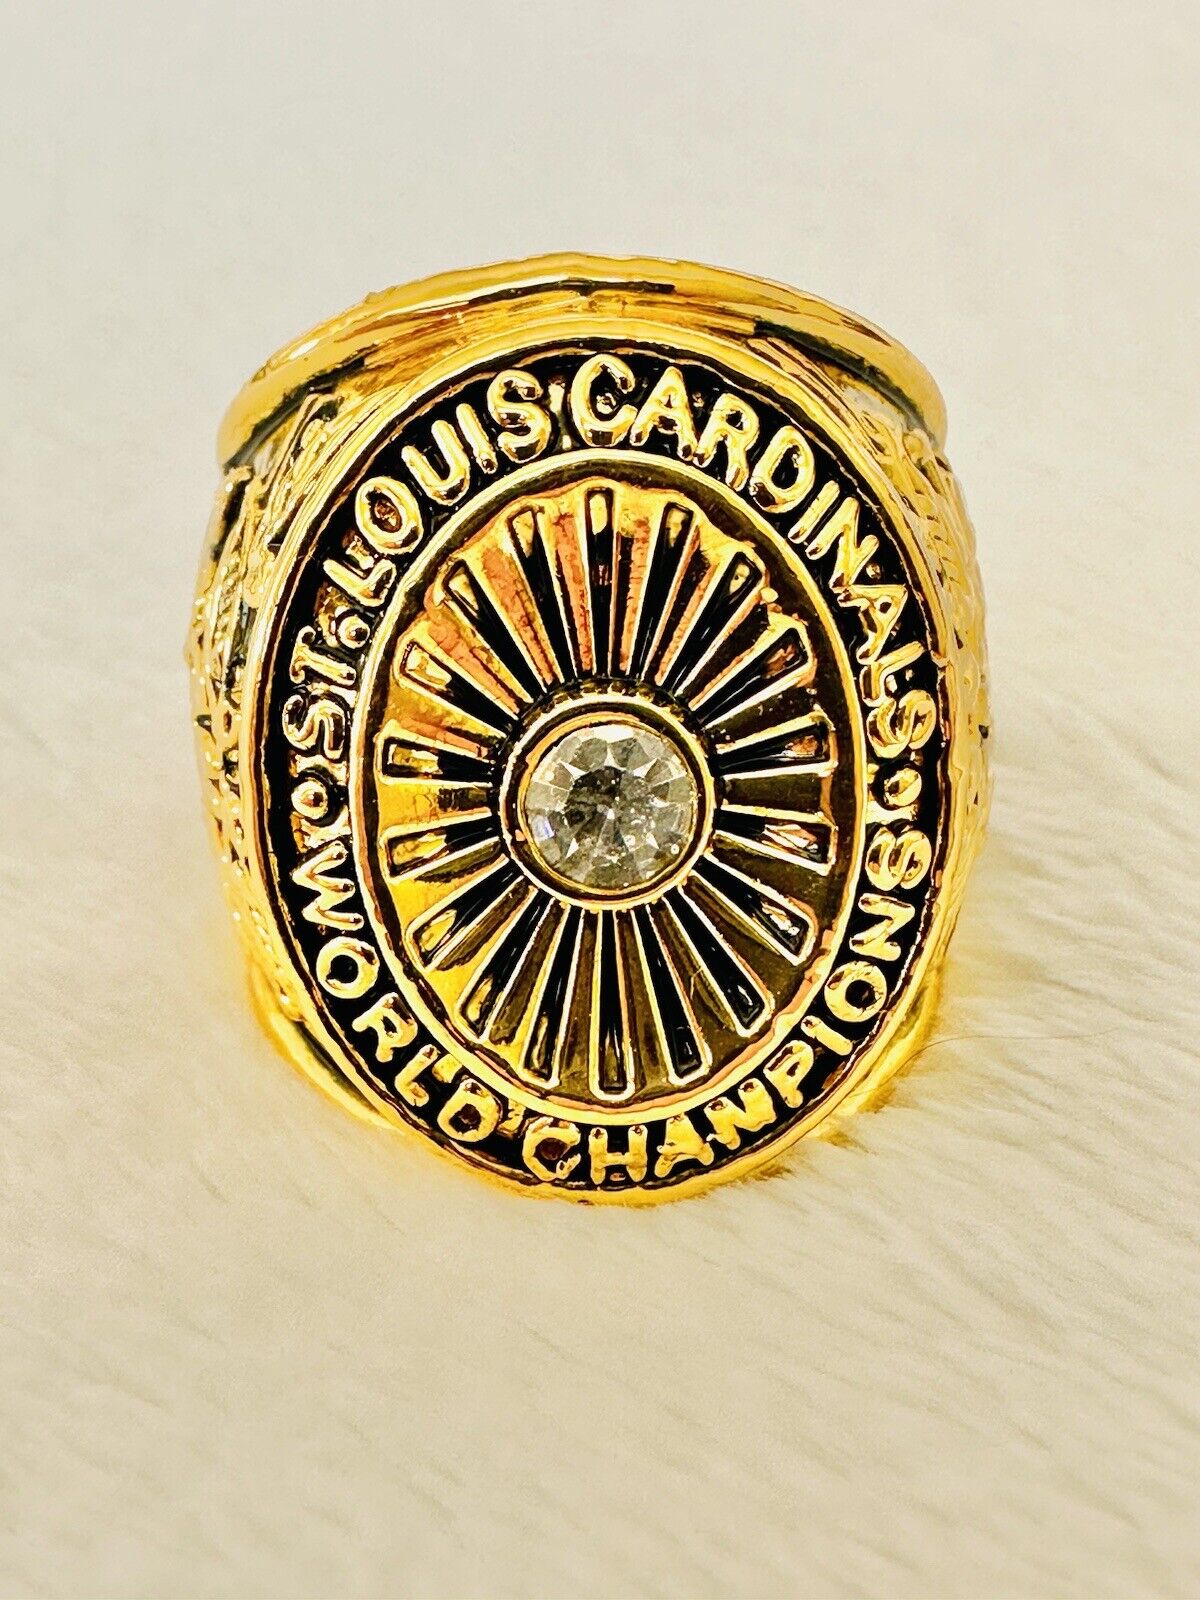 1934 St. Louis Cardinals World Series Championship Ring